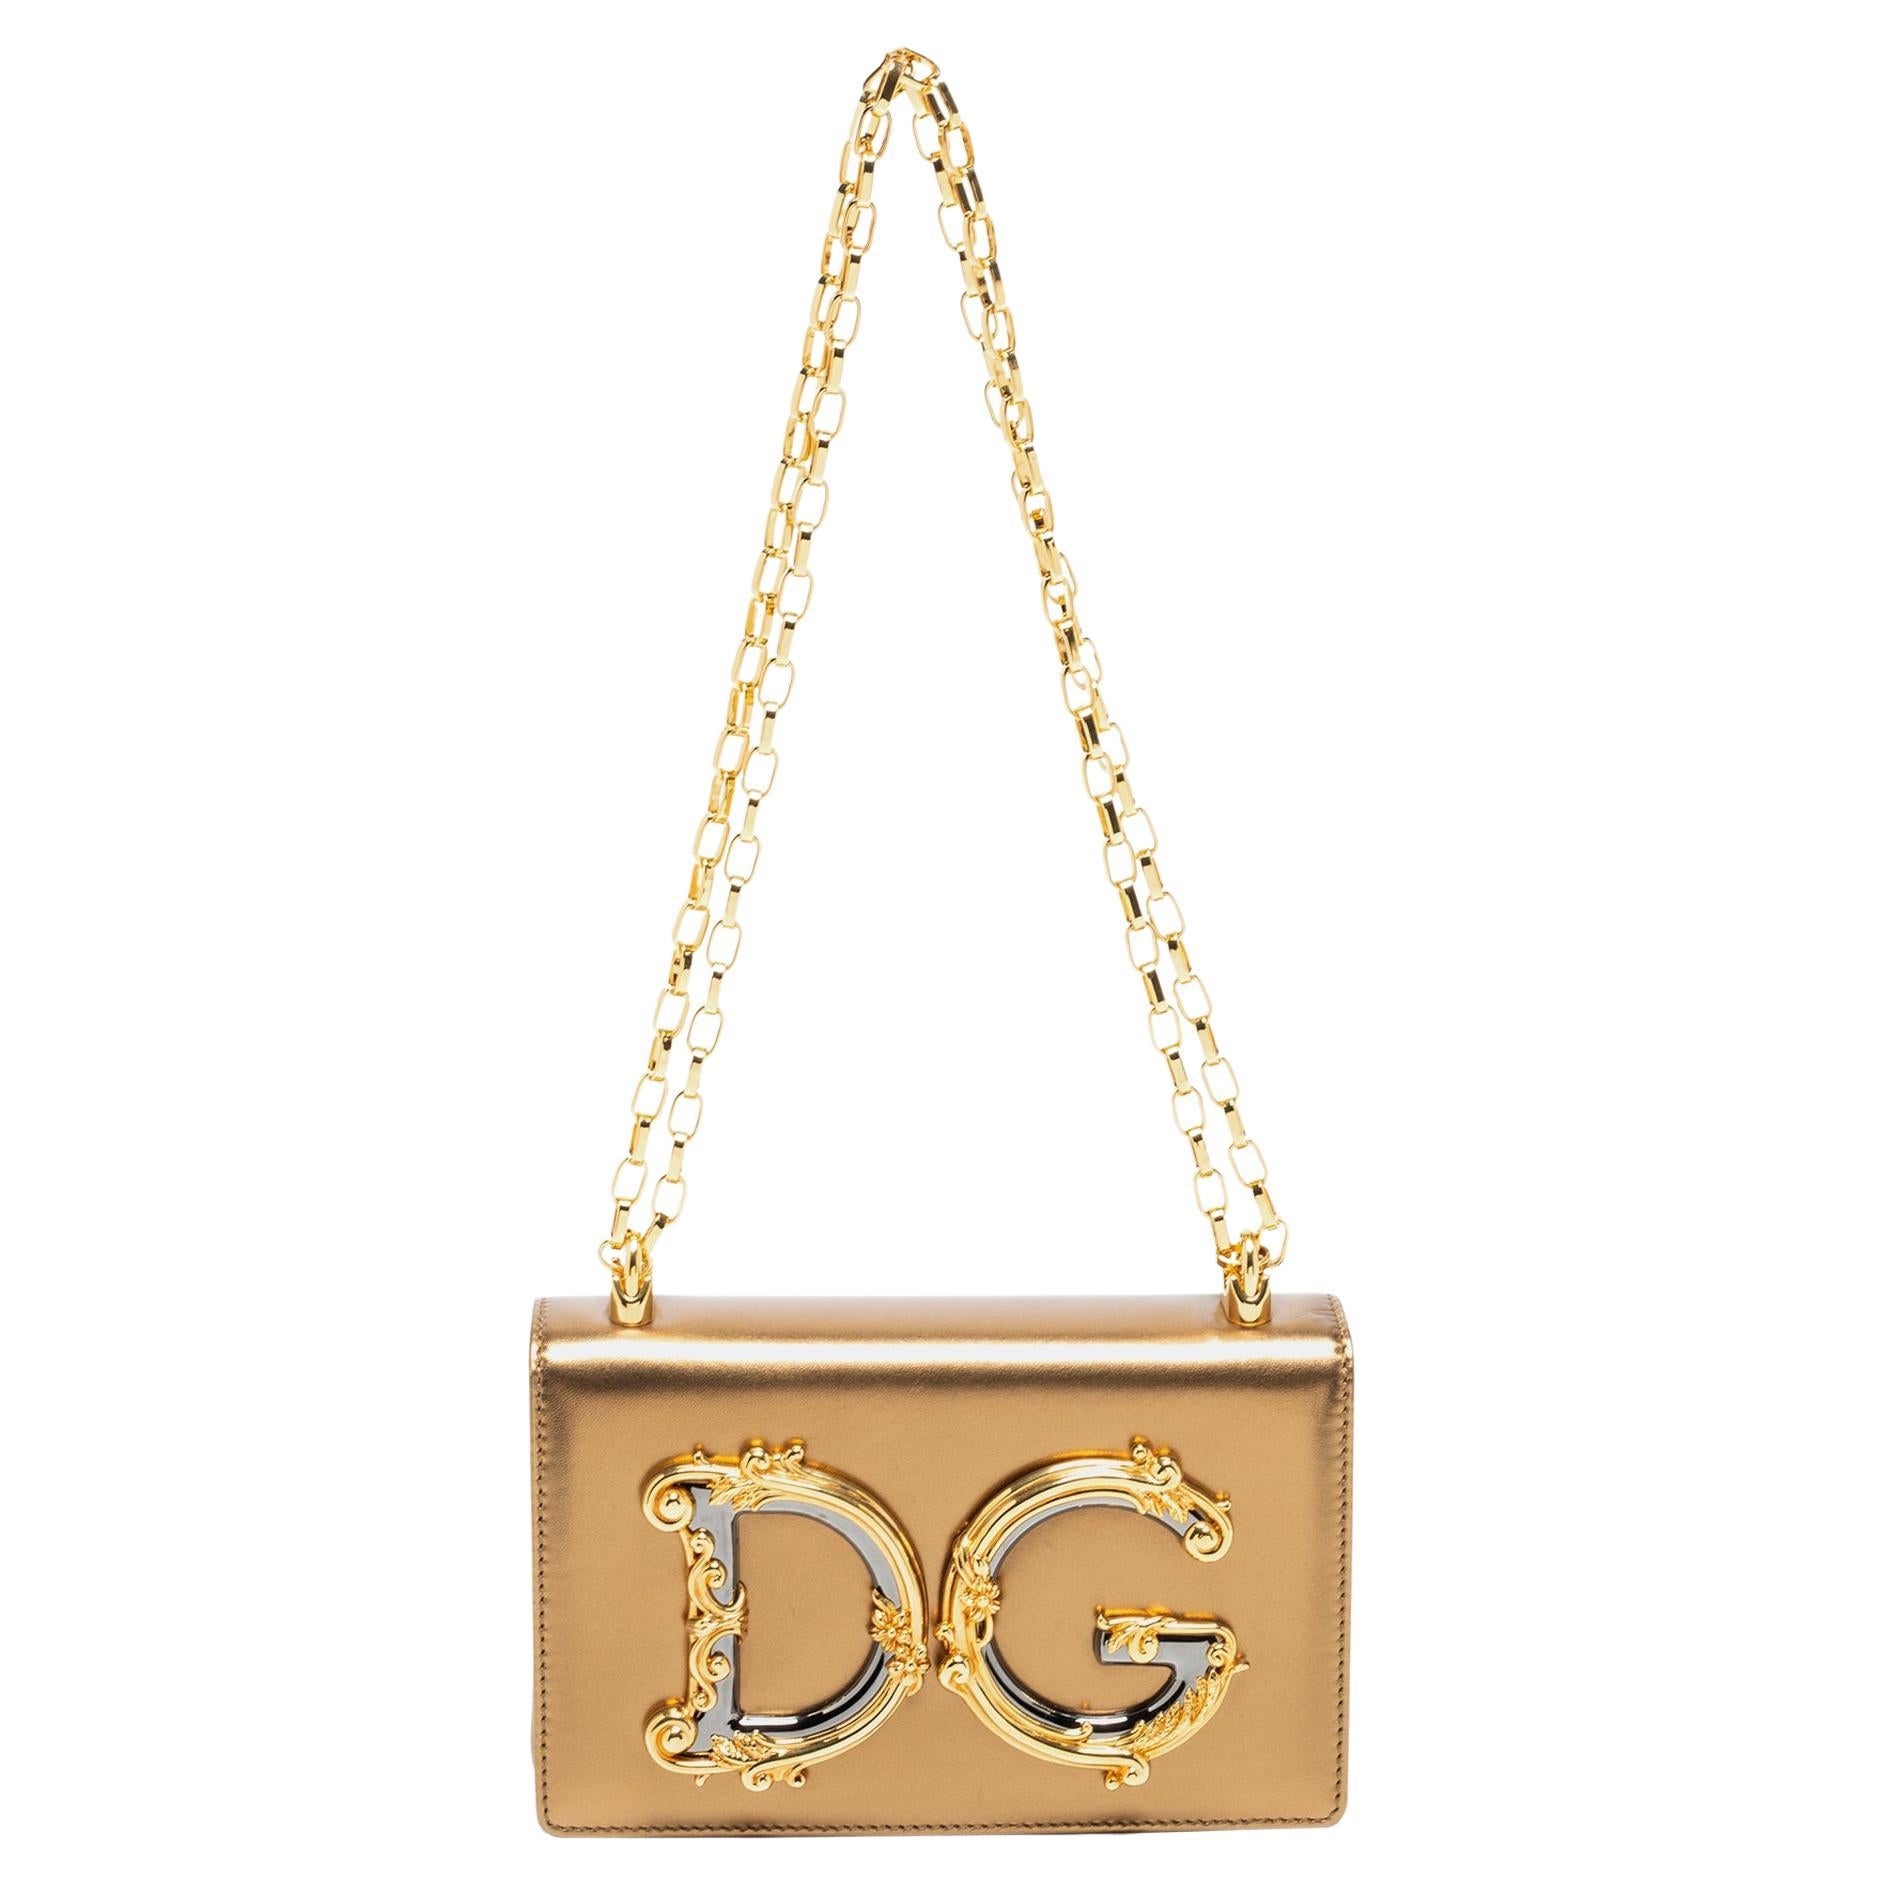 Dolce & Gabbana Metallic Gold Leather DG Girls Shoulder Bag